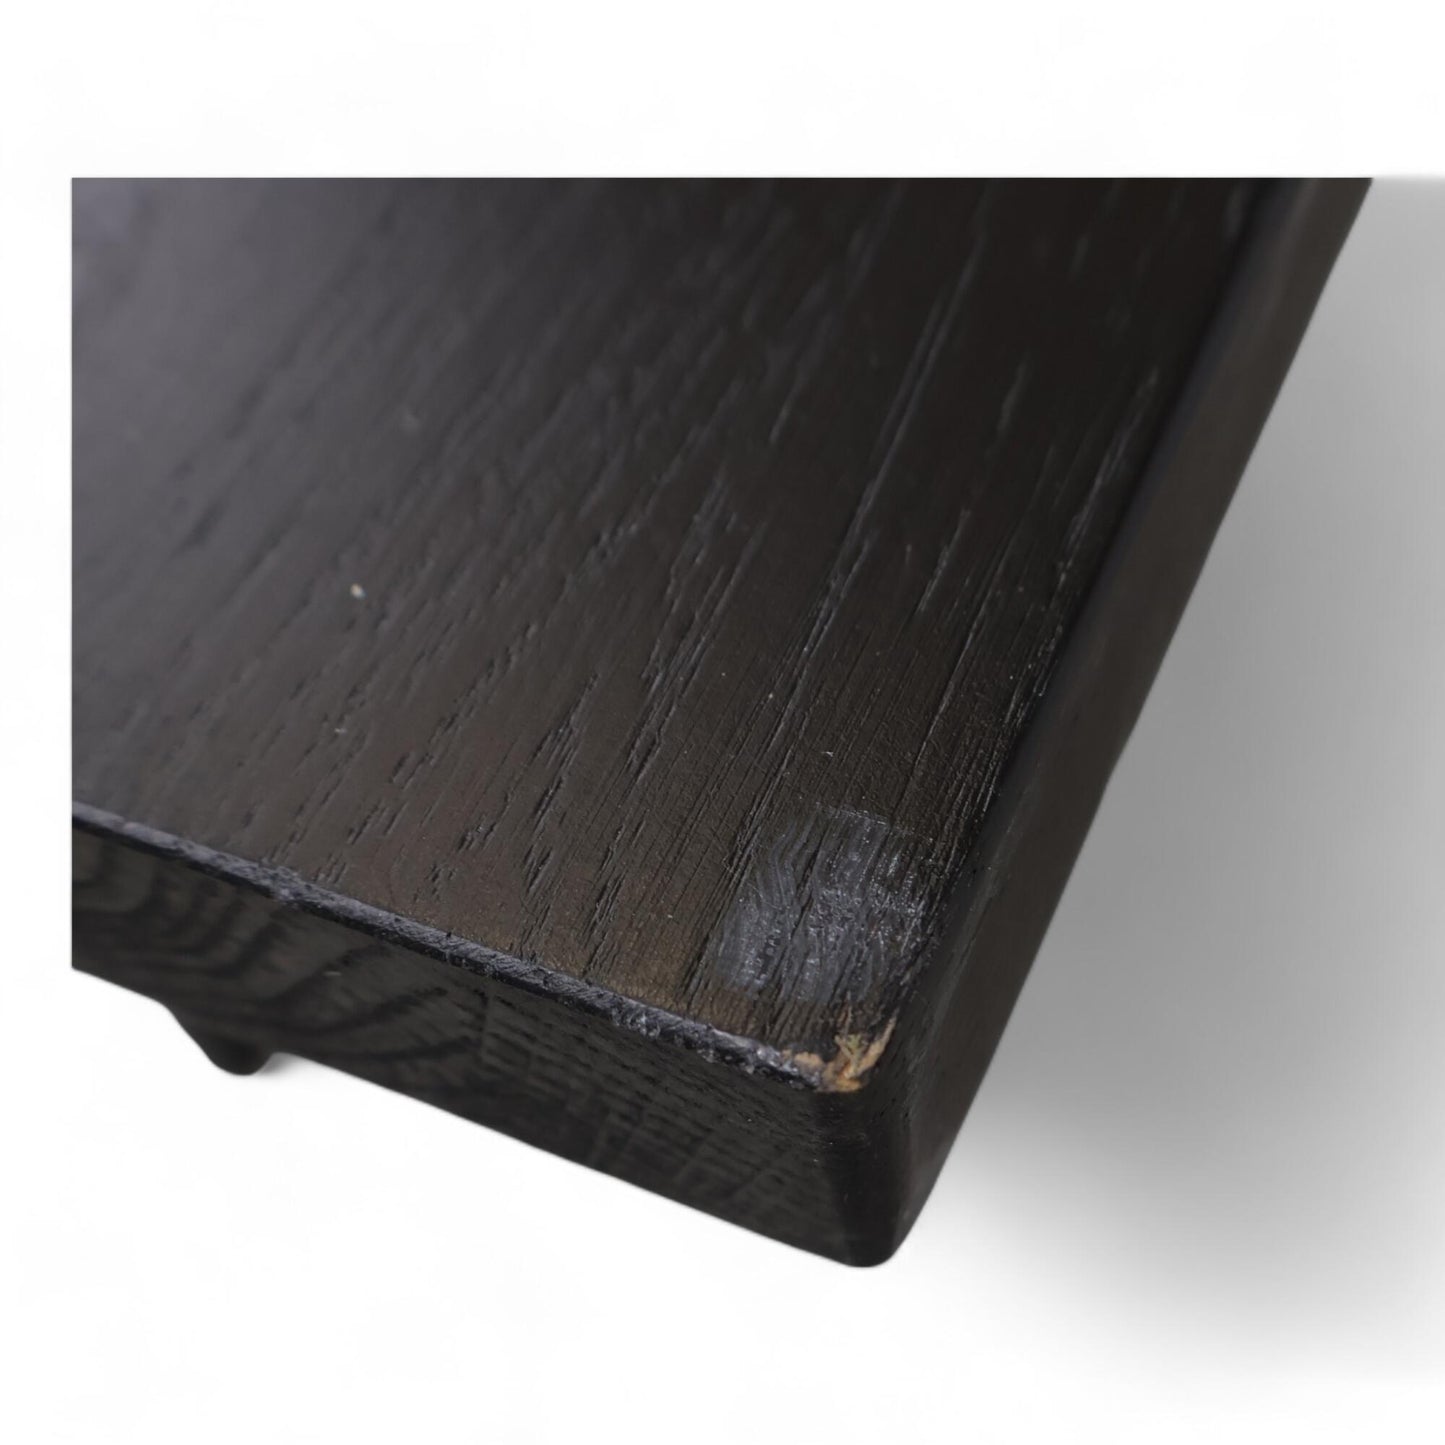 Nyrenset | Ygg & Lyng T-bord i sort, 220 cm